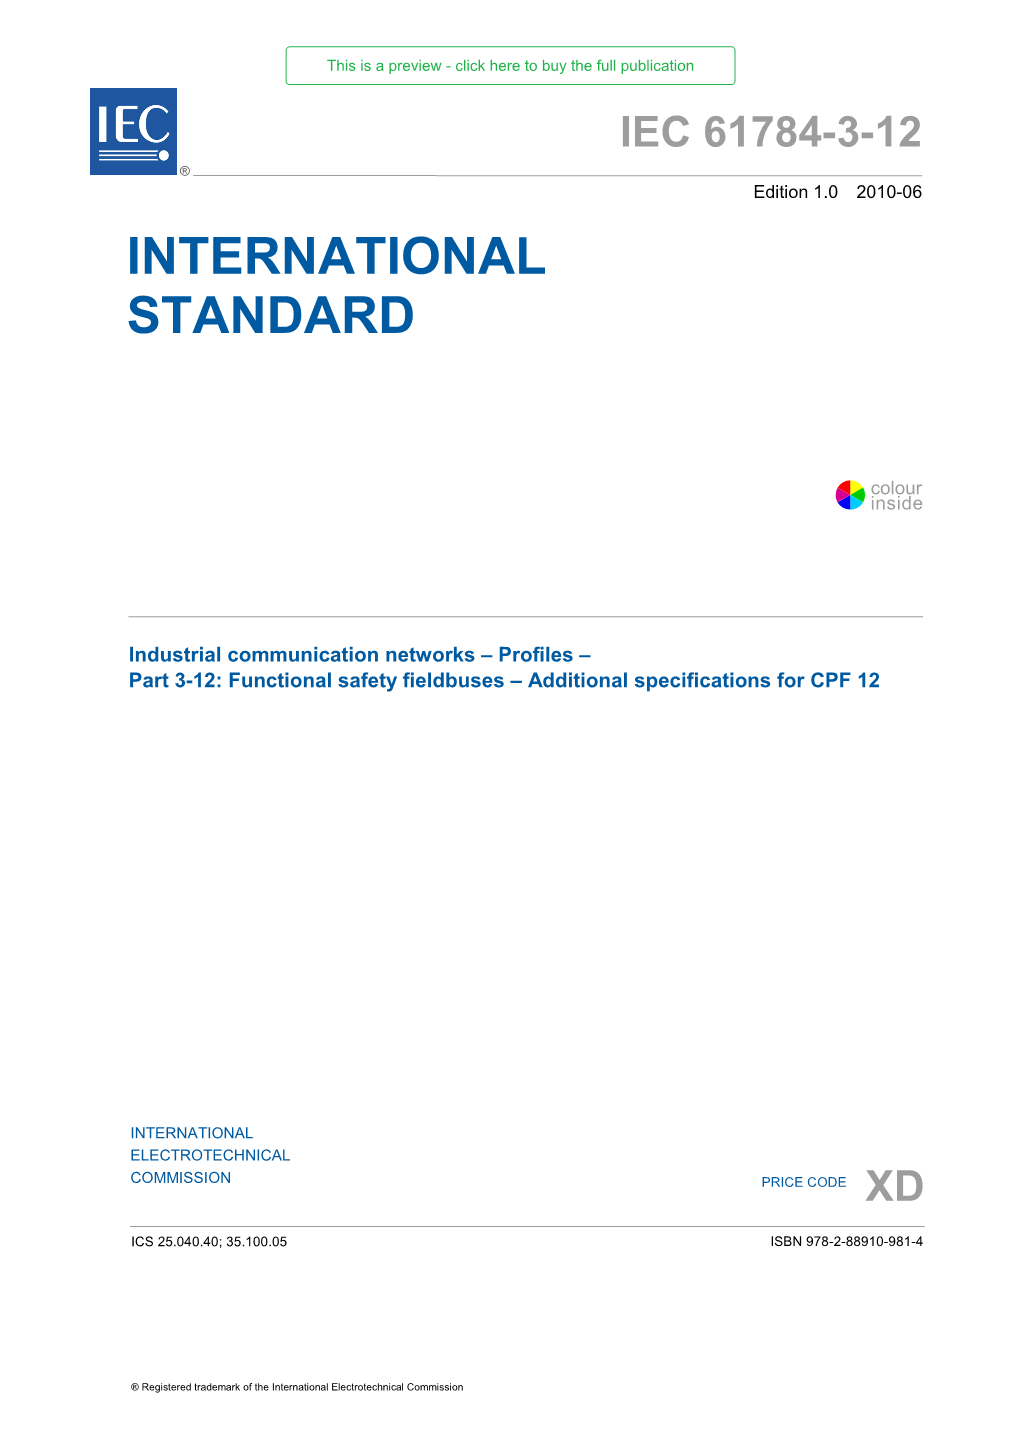 IEC 61784-3-12 ® Edition 1.0 2010-06 INTERNATIONAL STANDARD